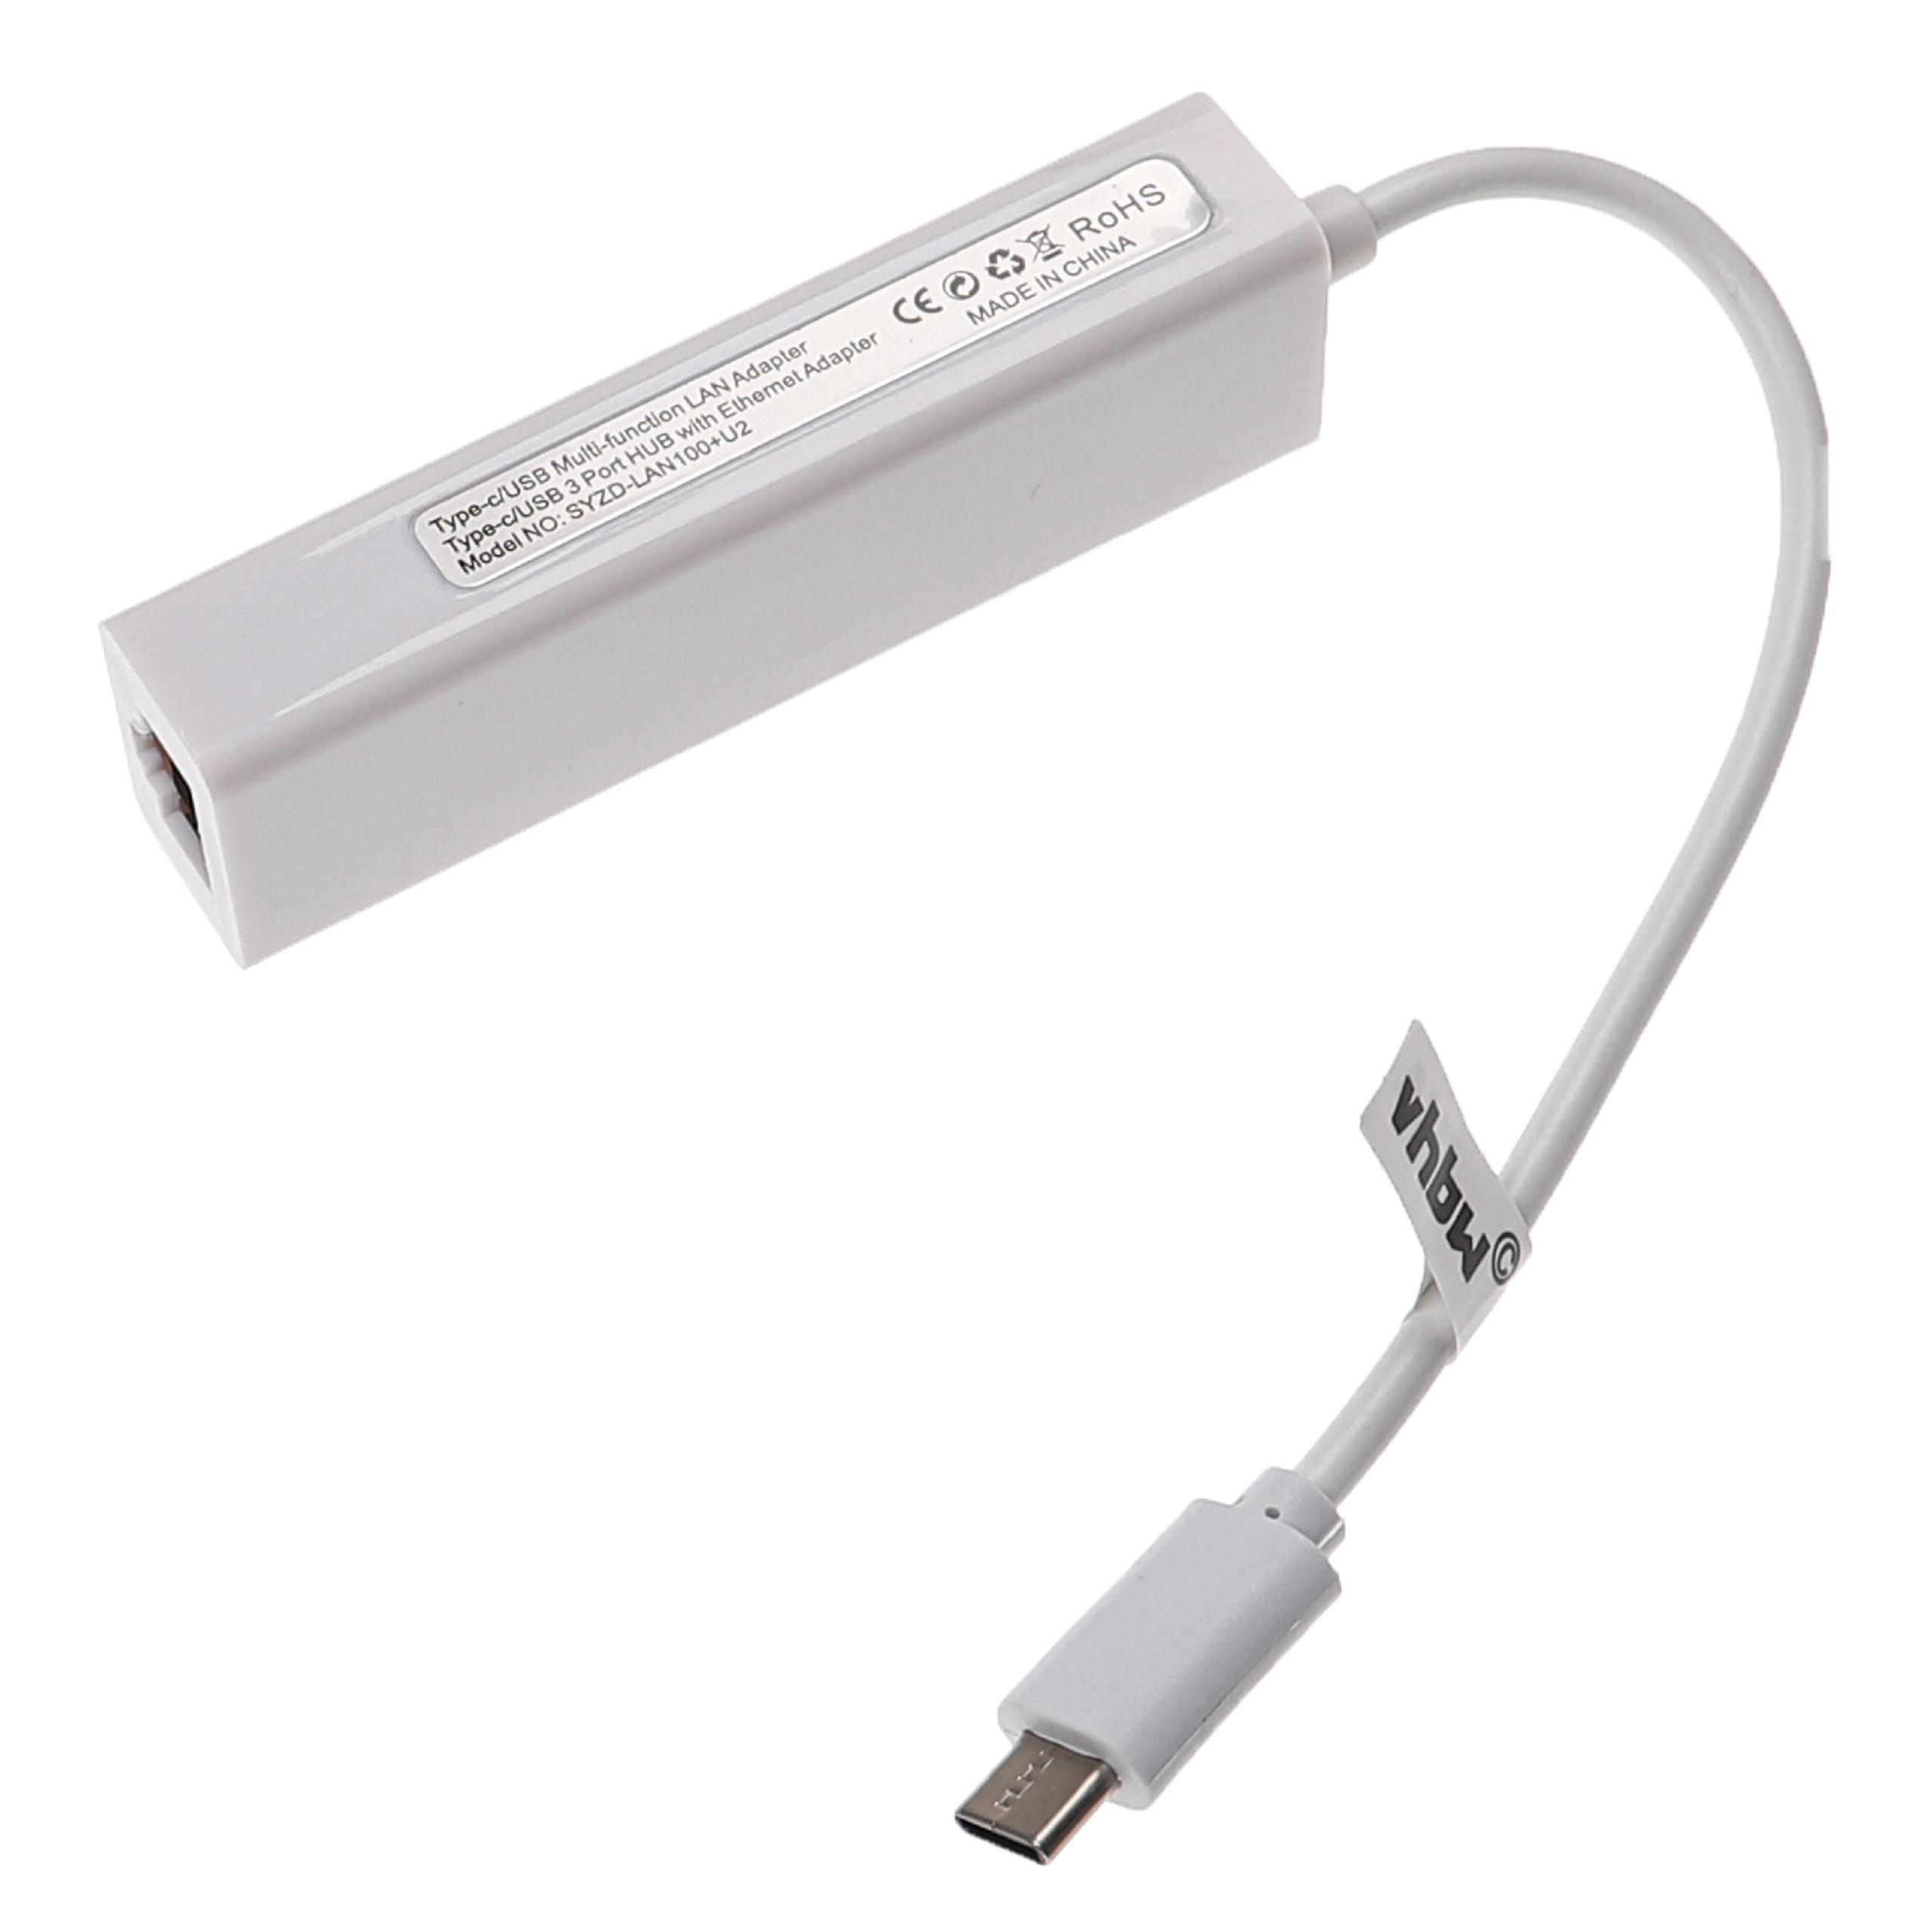 Adaptador USB-C (m) a RJ45 (h) Ethernet para portátil, notebook, PC + 3 USB A (h) adicionales